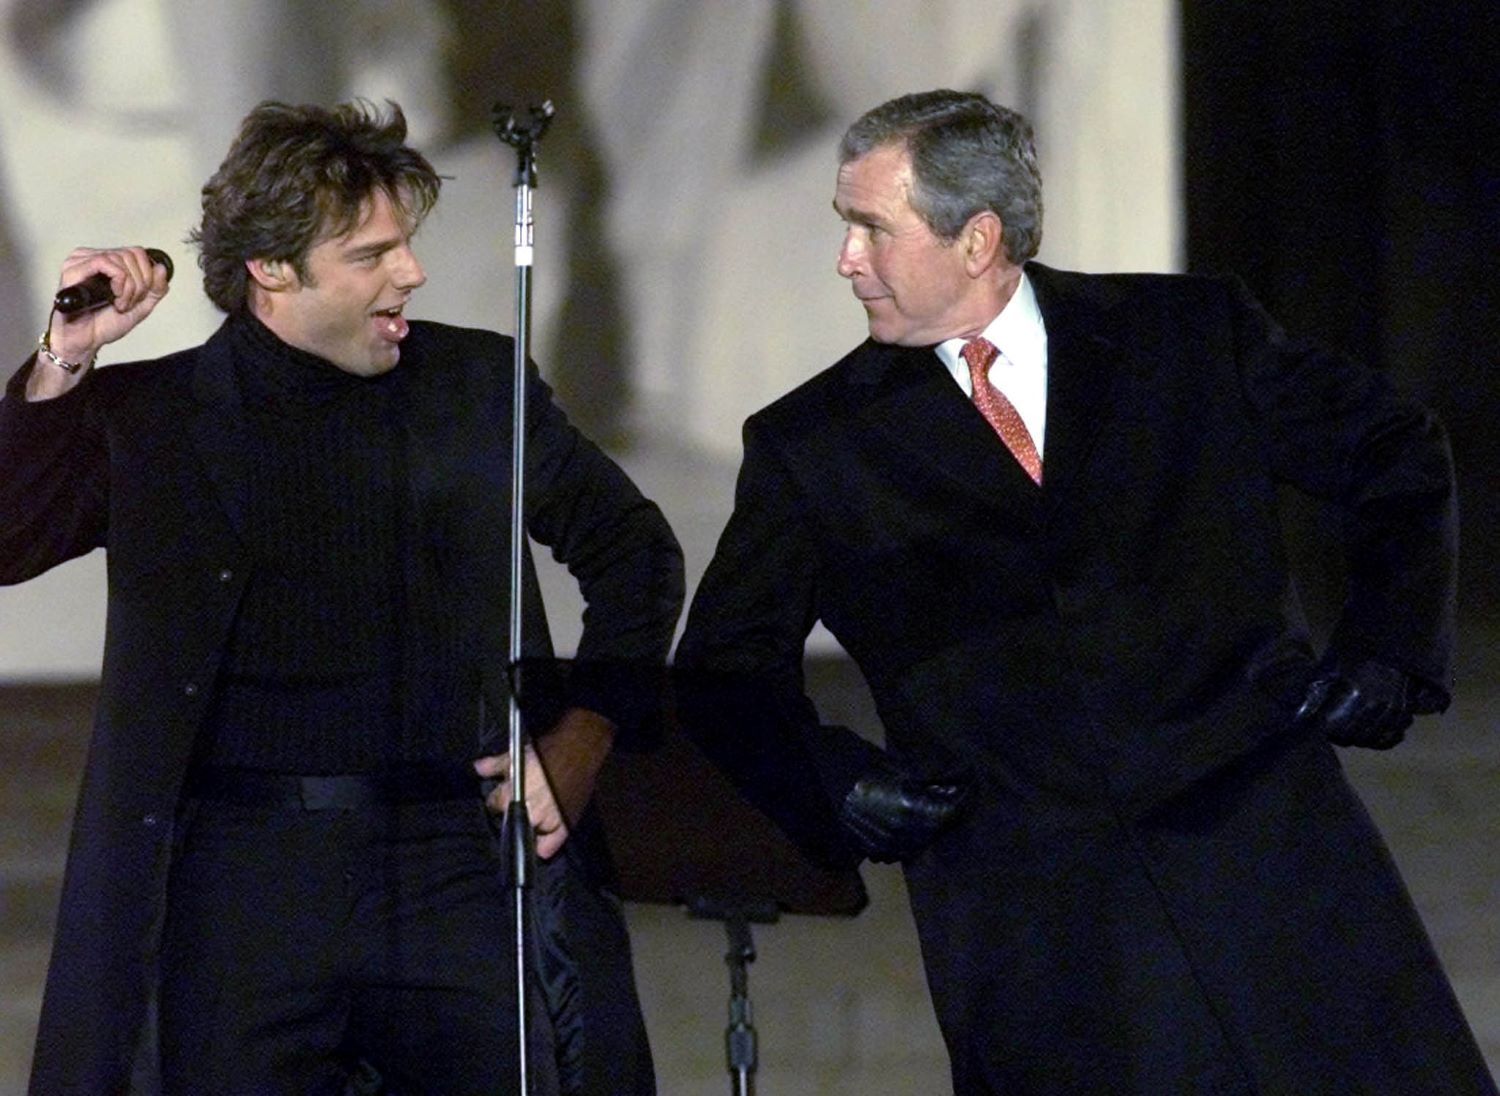 Ricky Martin and President George W. Bush